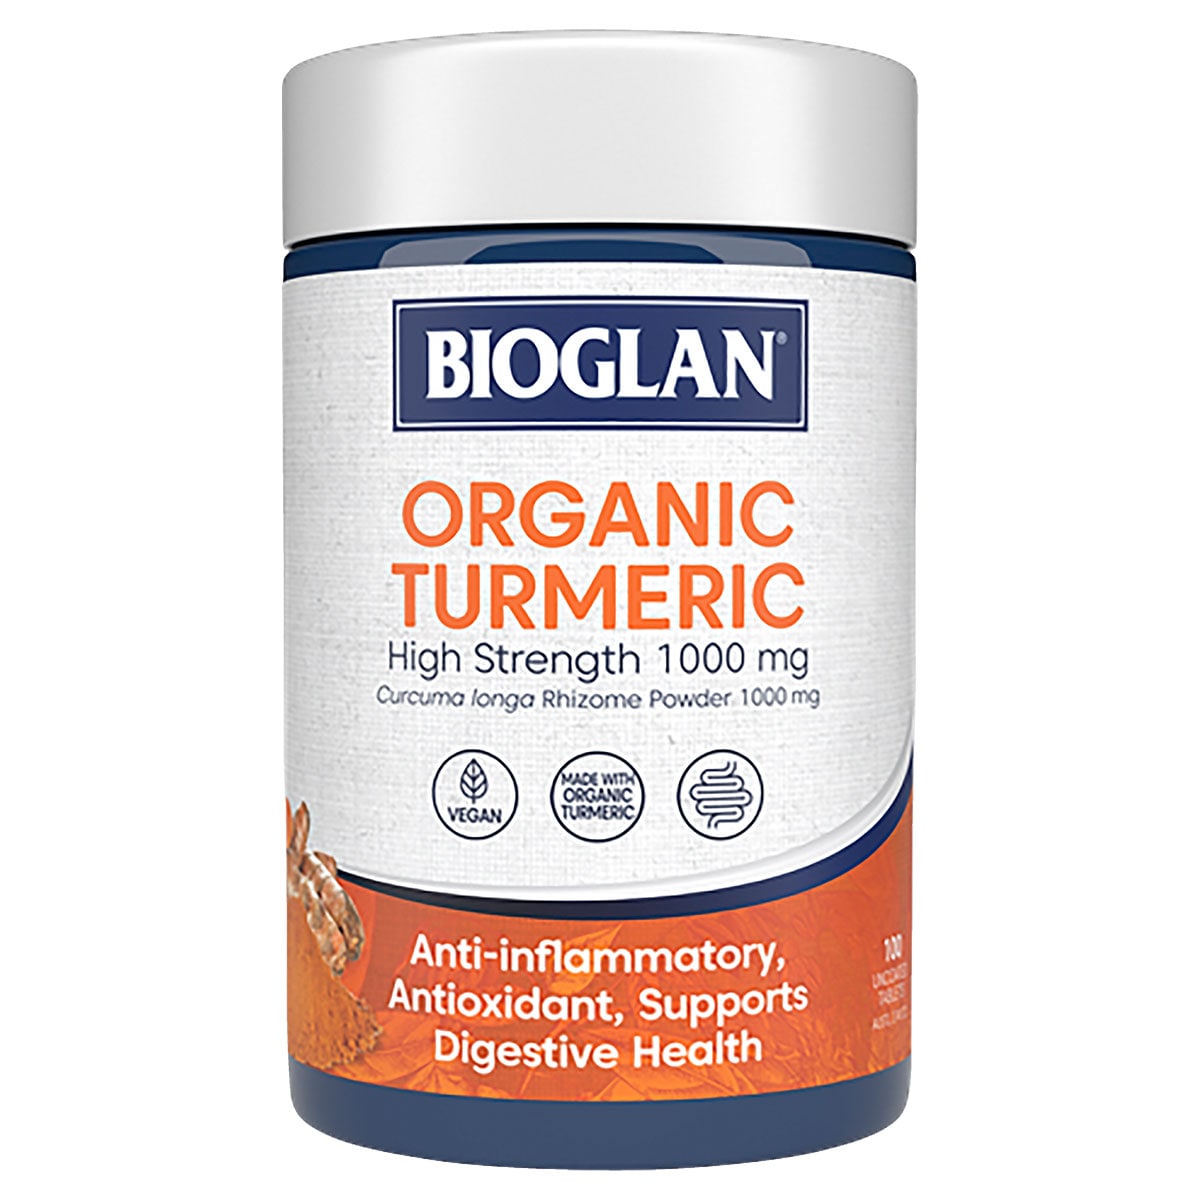 Bioglan Organic Turmeric High Strength 1000mg 100 Tablets